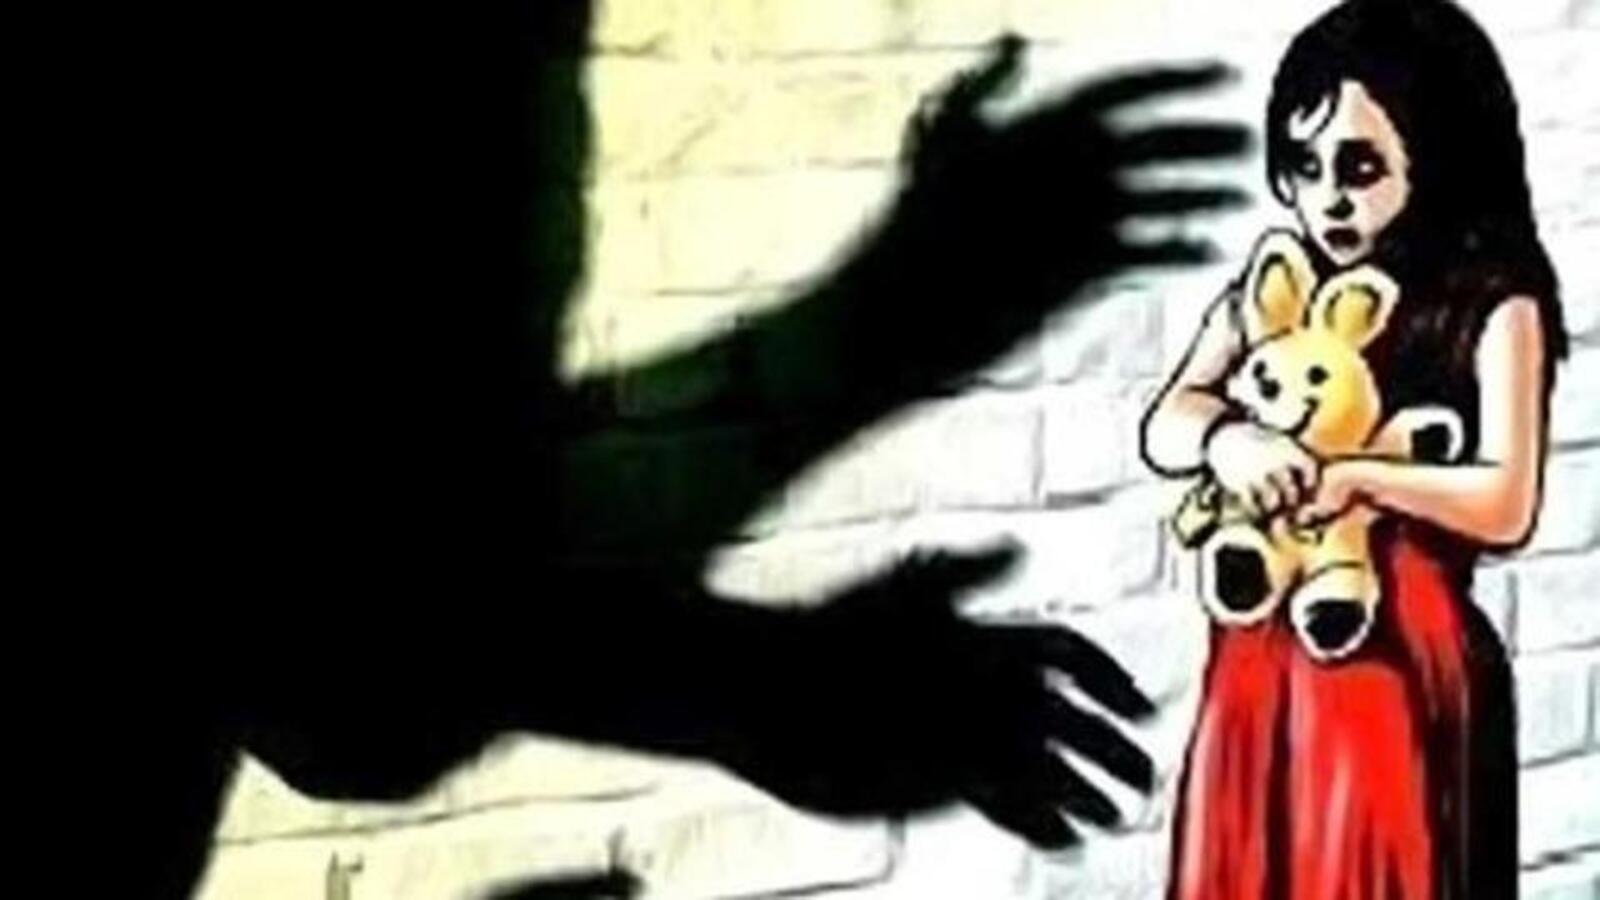 School Girlgand Sex - Six-year-old girlgang-raped in moving car in Haridwar: Police | Latest News  India - Hindustan Times